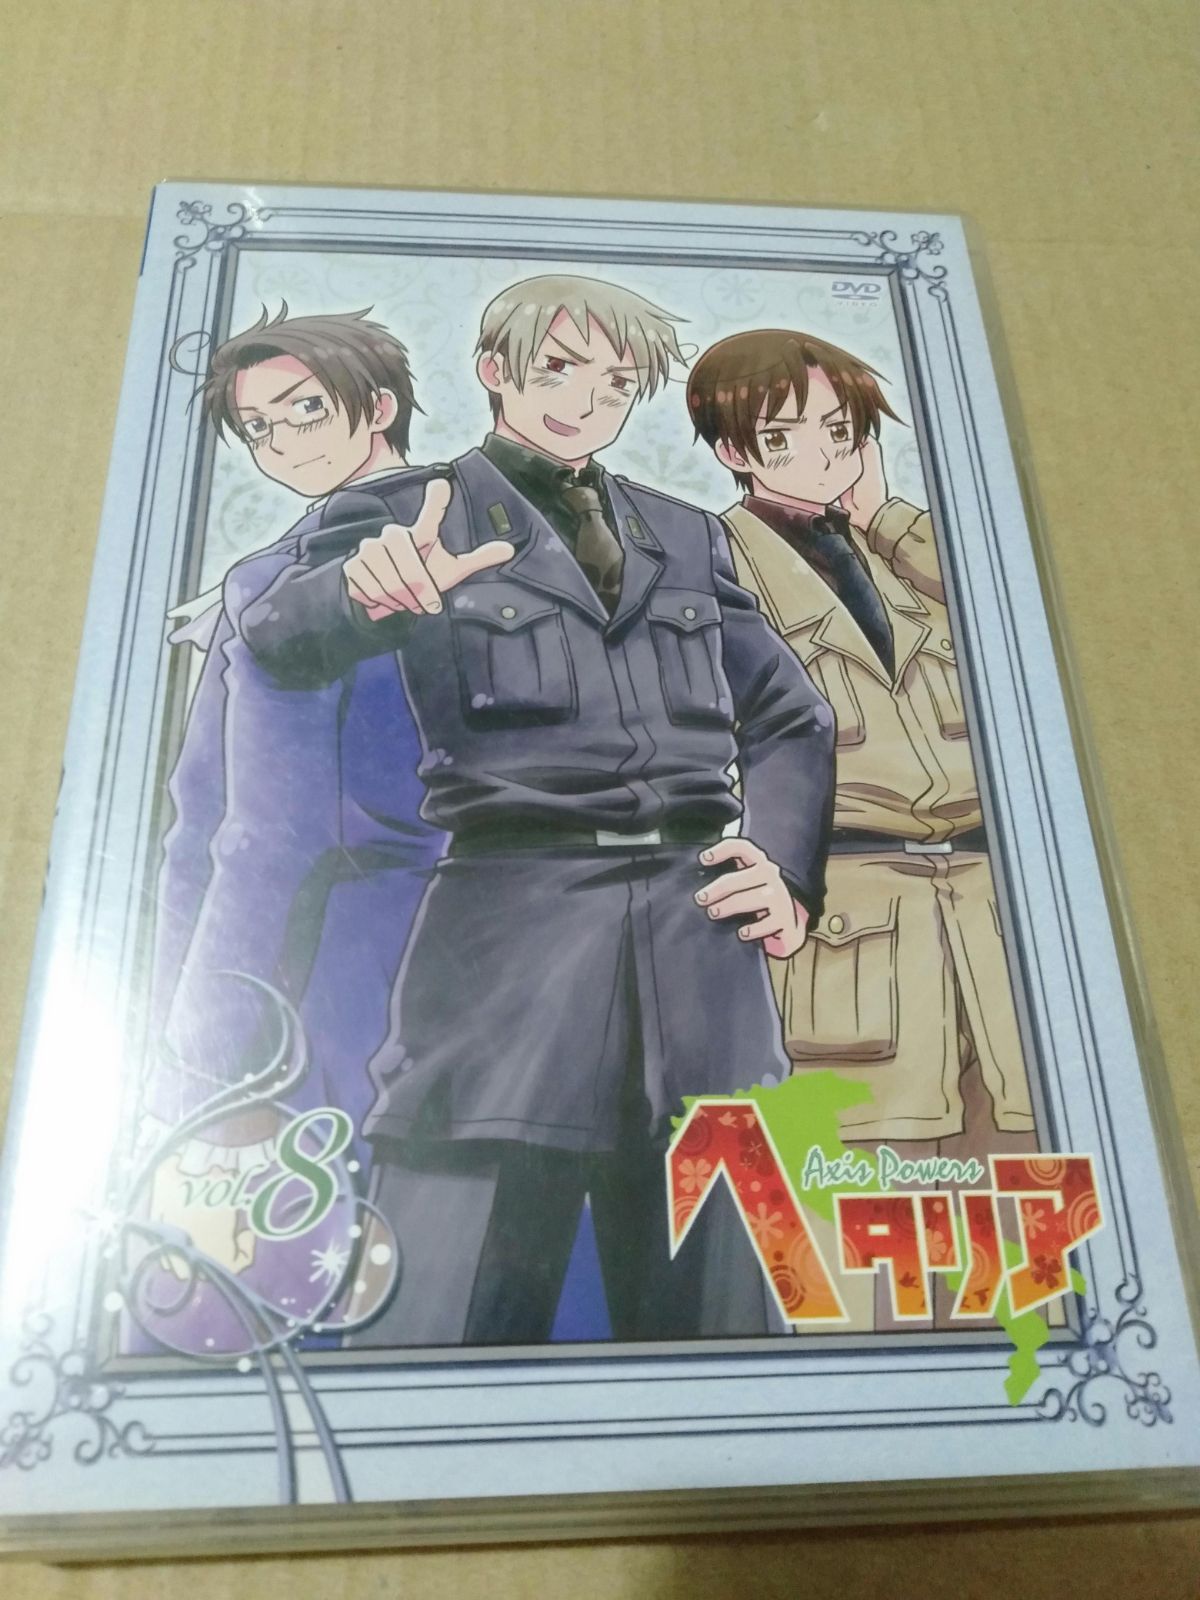 DVD+CD】ヘタリア Axis Powers vol.8【初回限定版】 - メルカリ